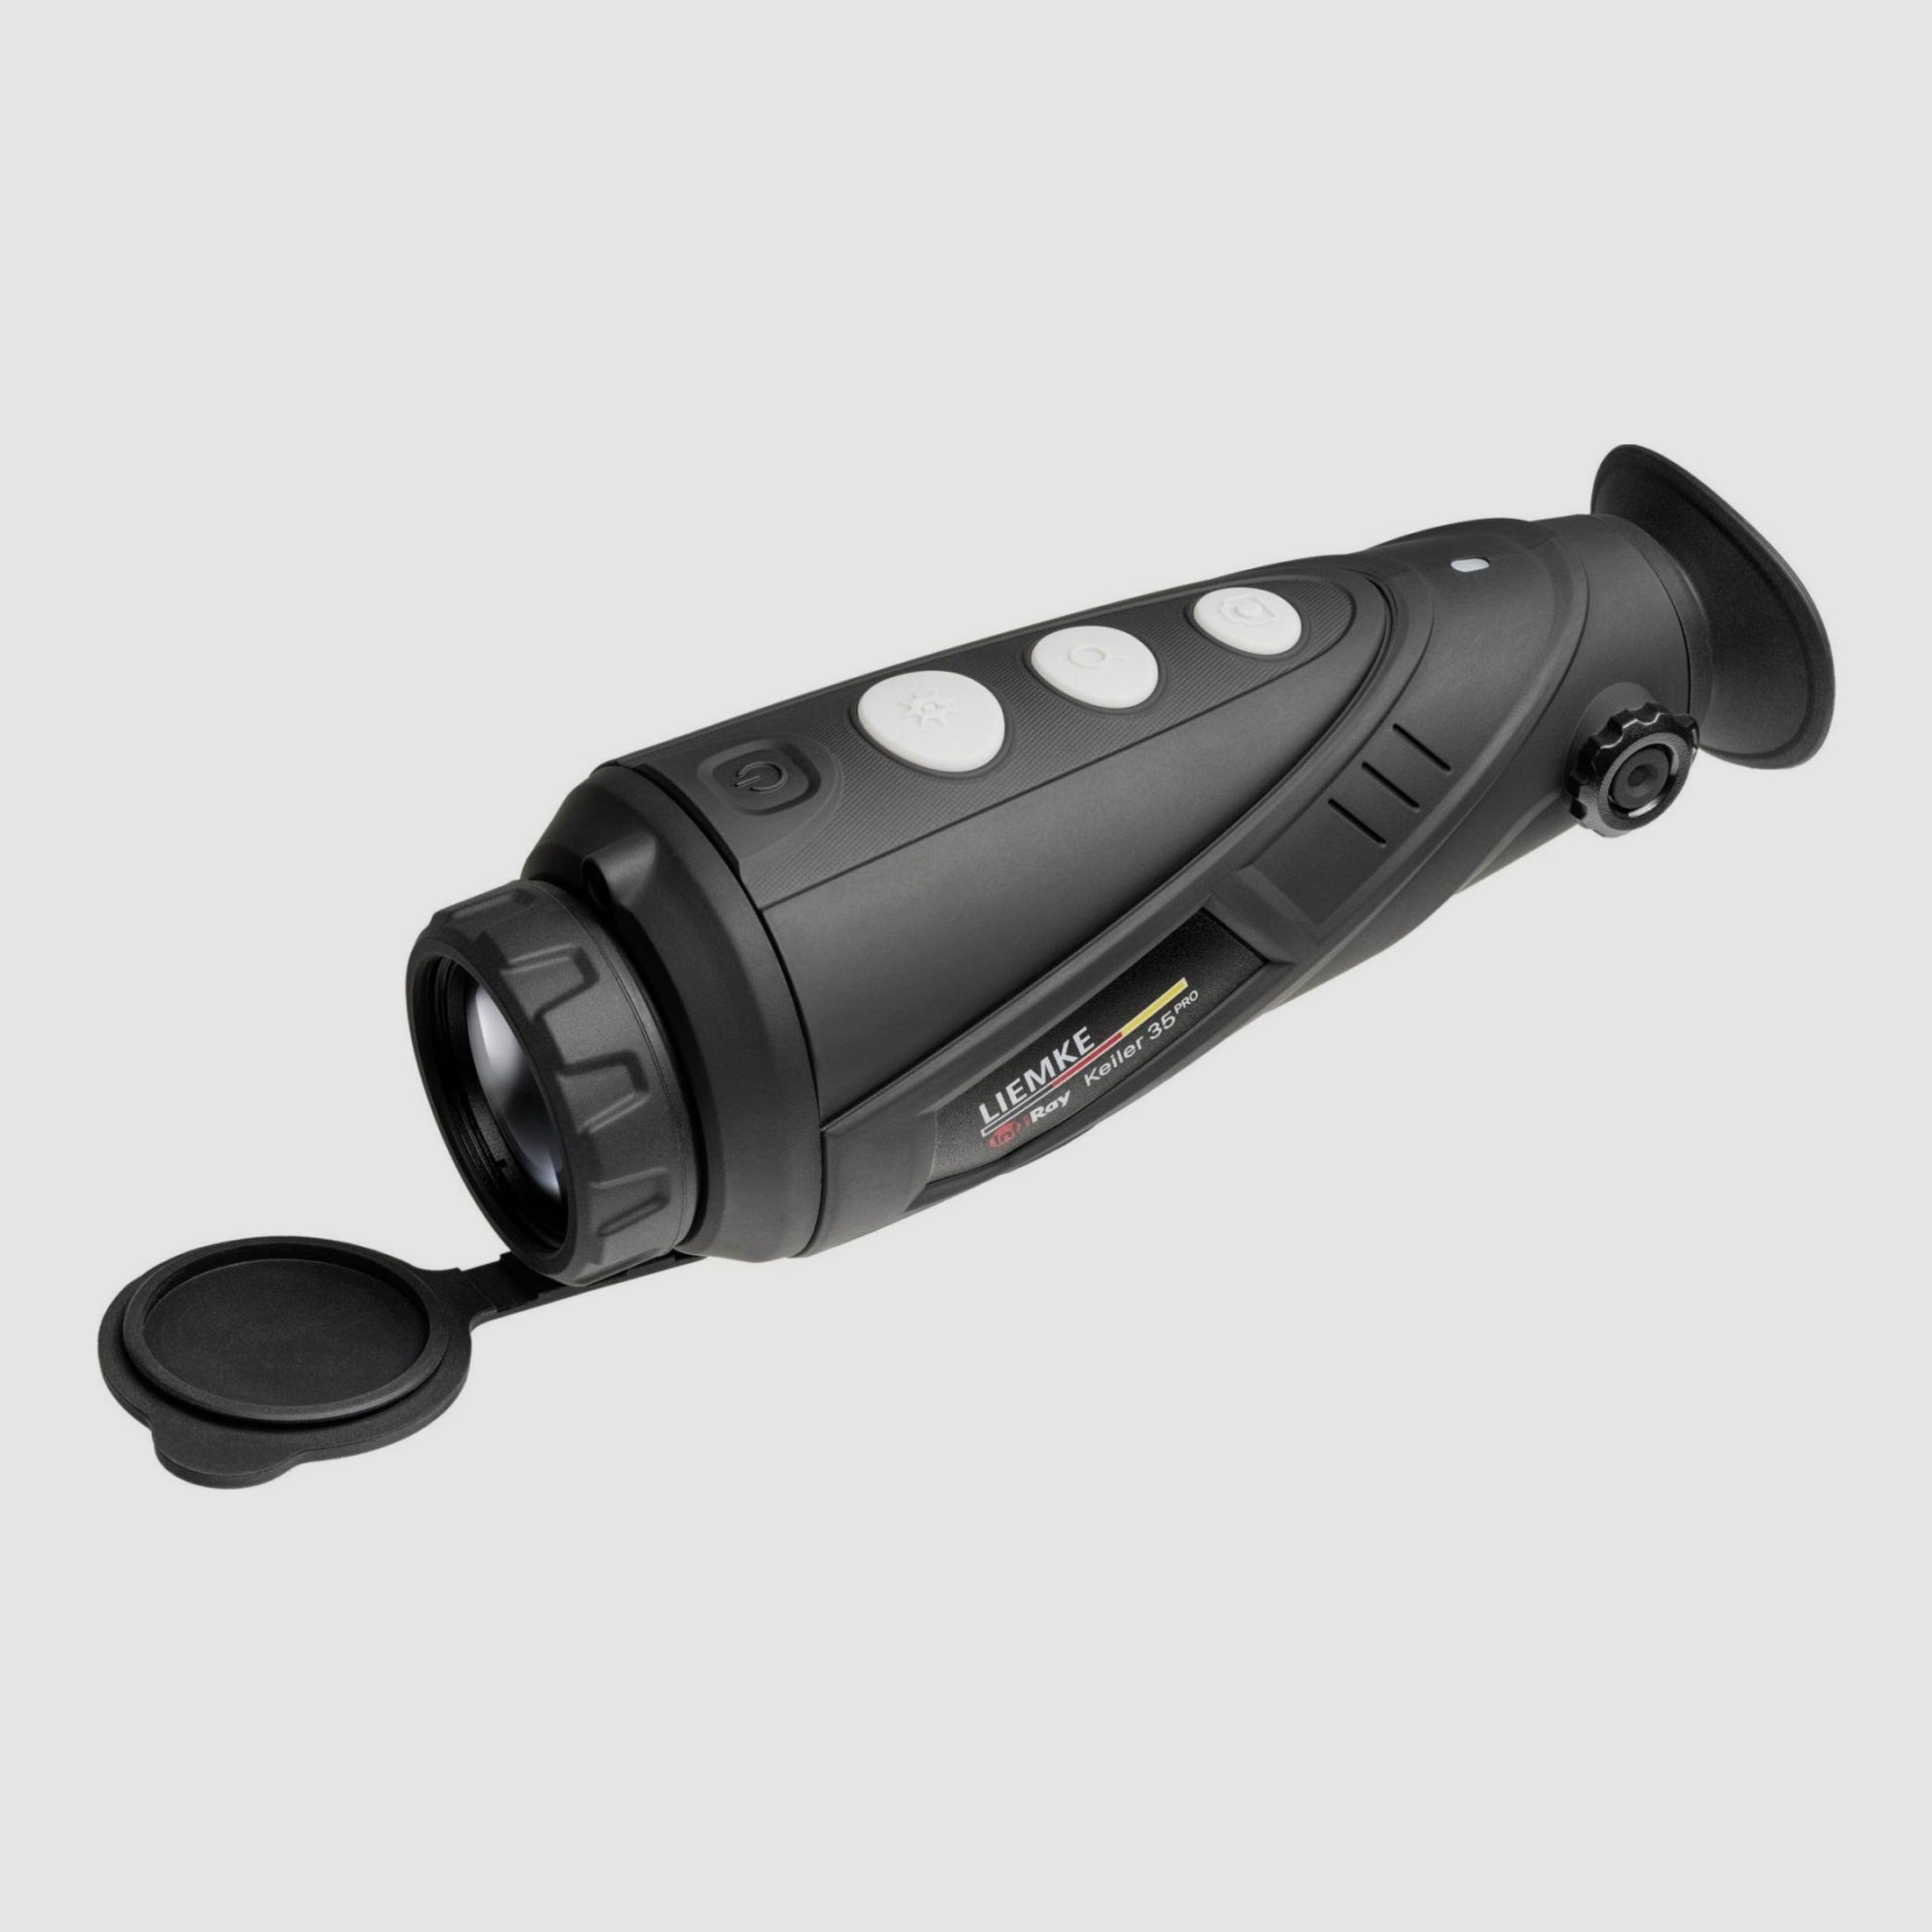 Liemke Wärmebildkamera Keiler-35 Pro (2020) Schwarz